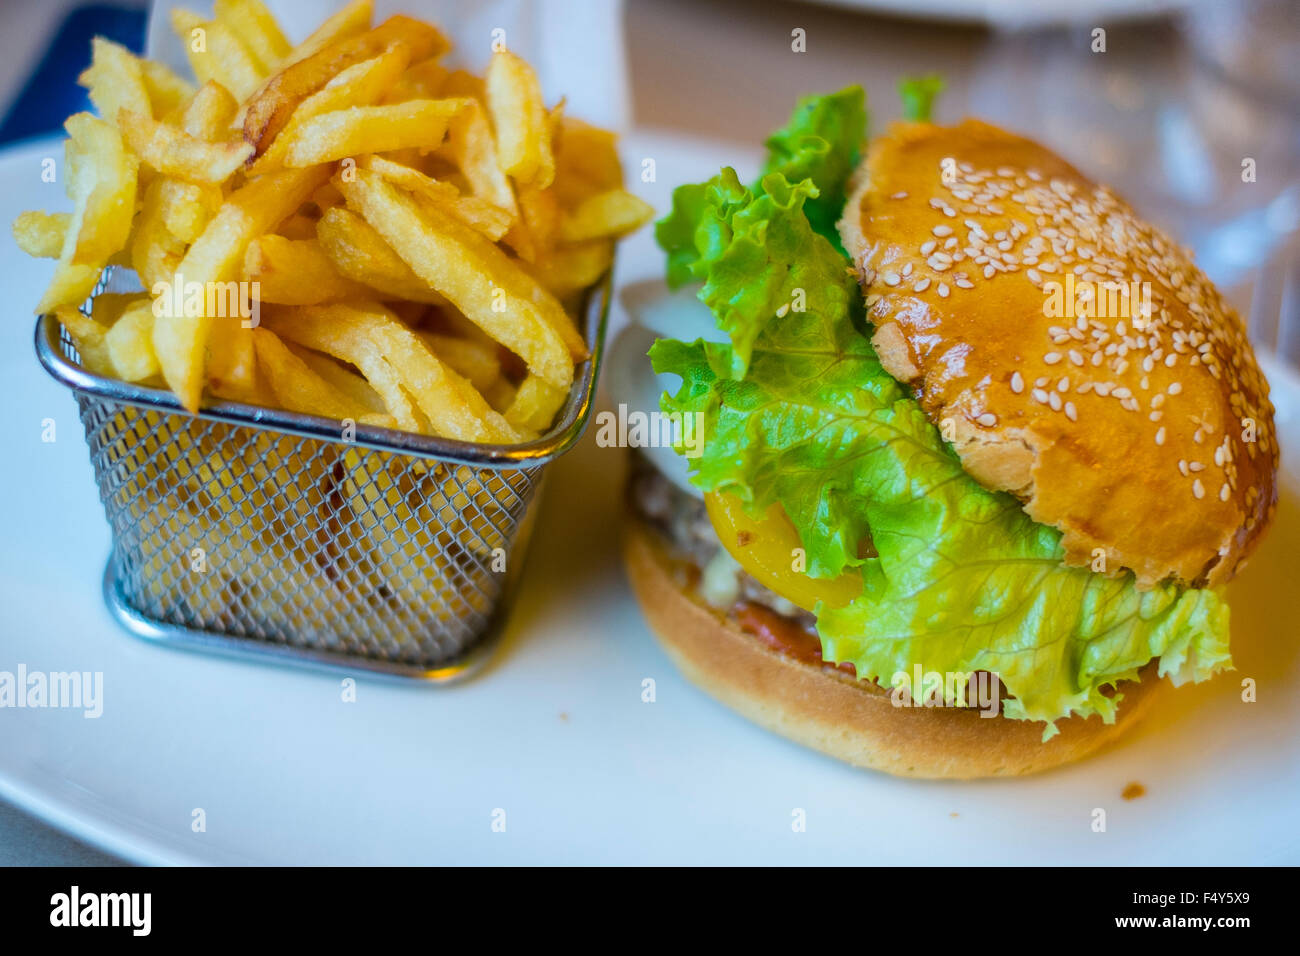 Hamburger et frites dans un restaurant à Morlaix, France Banque D'Images